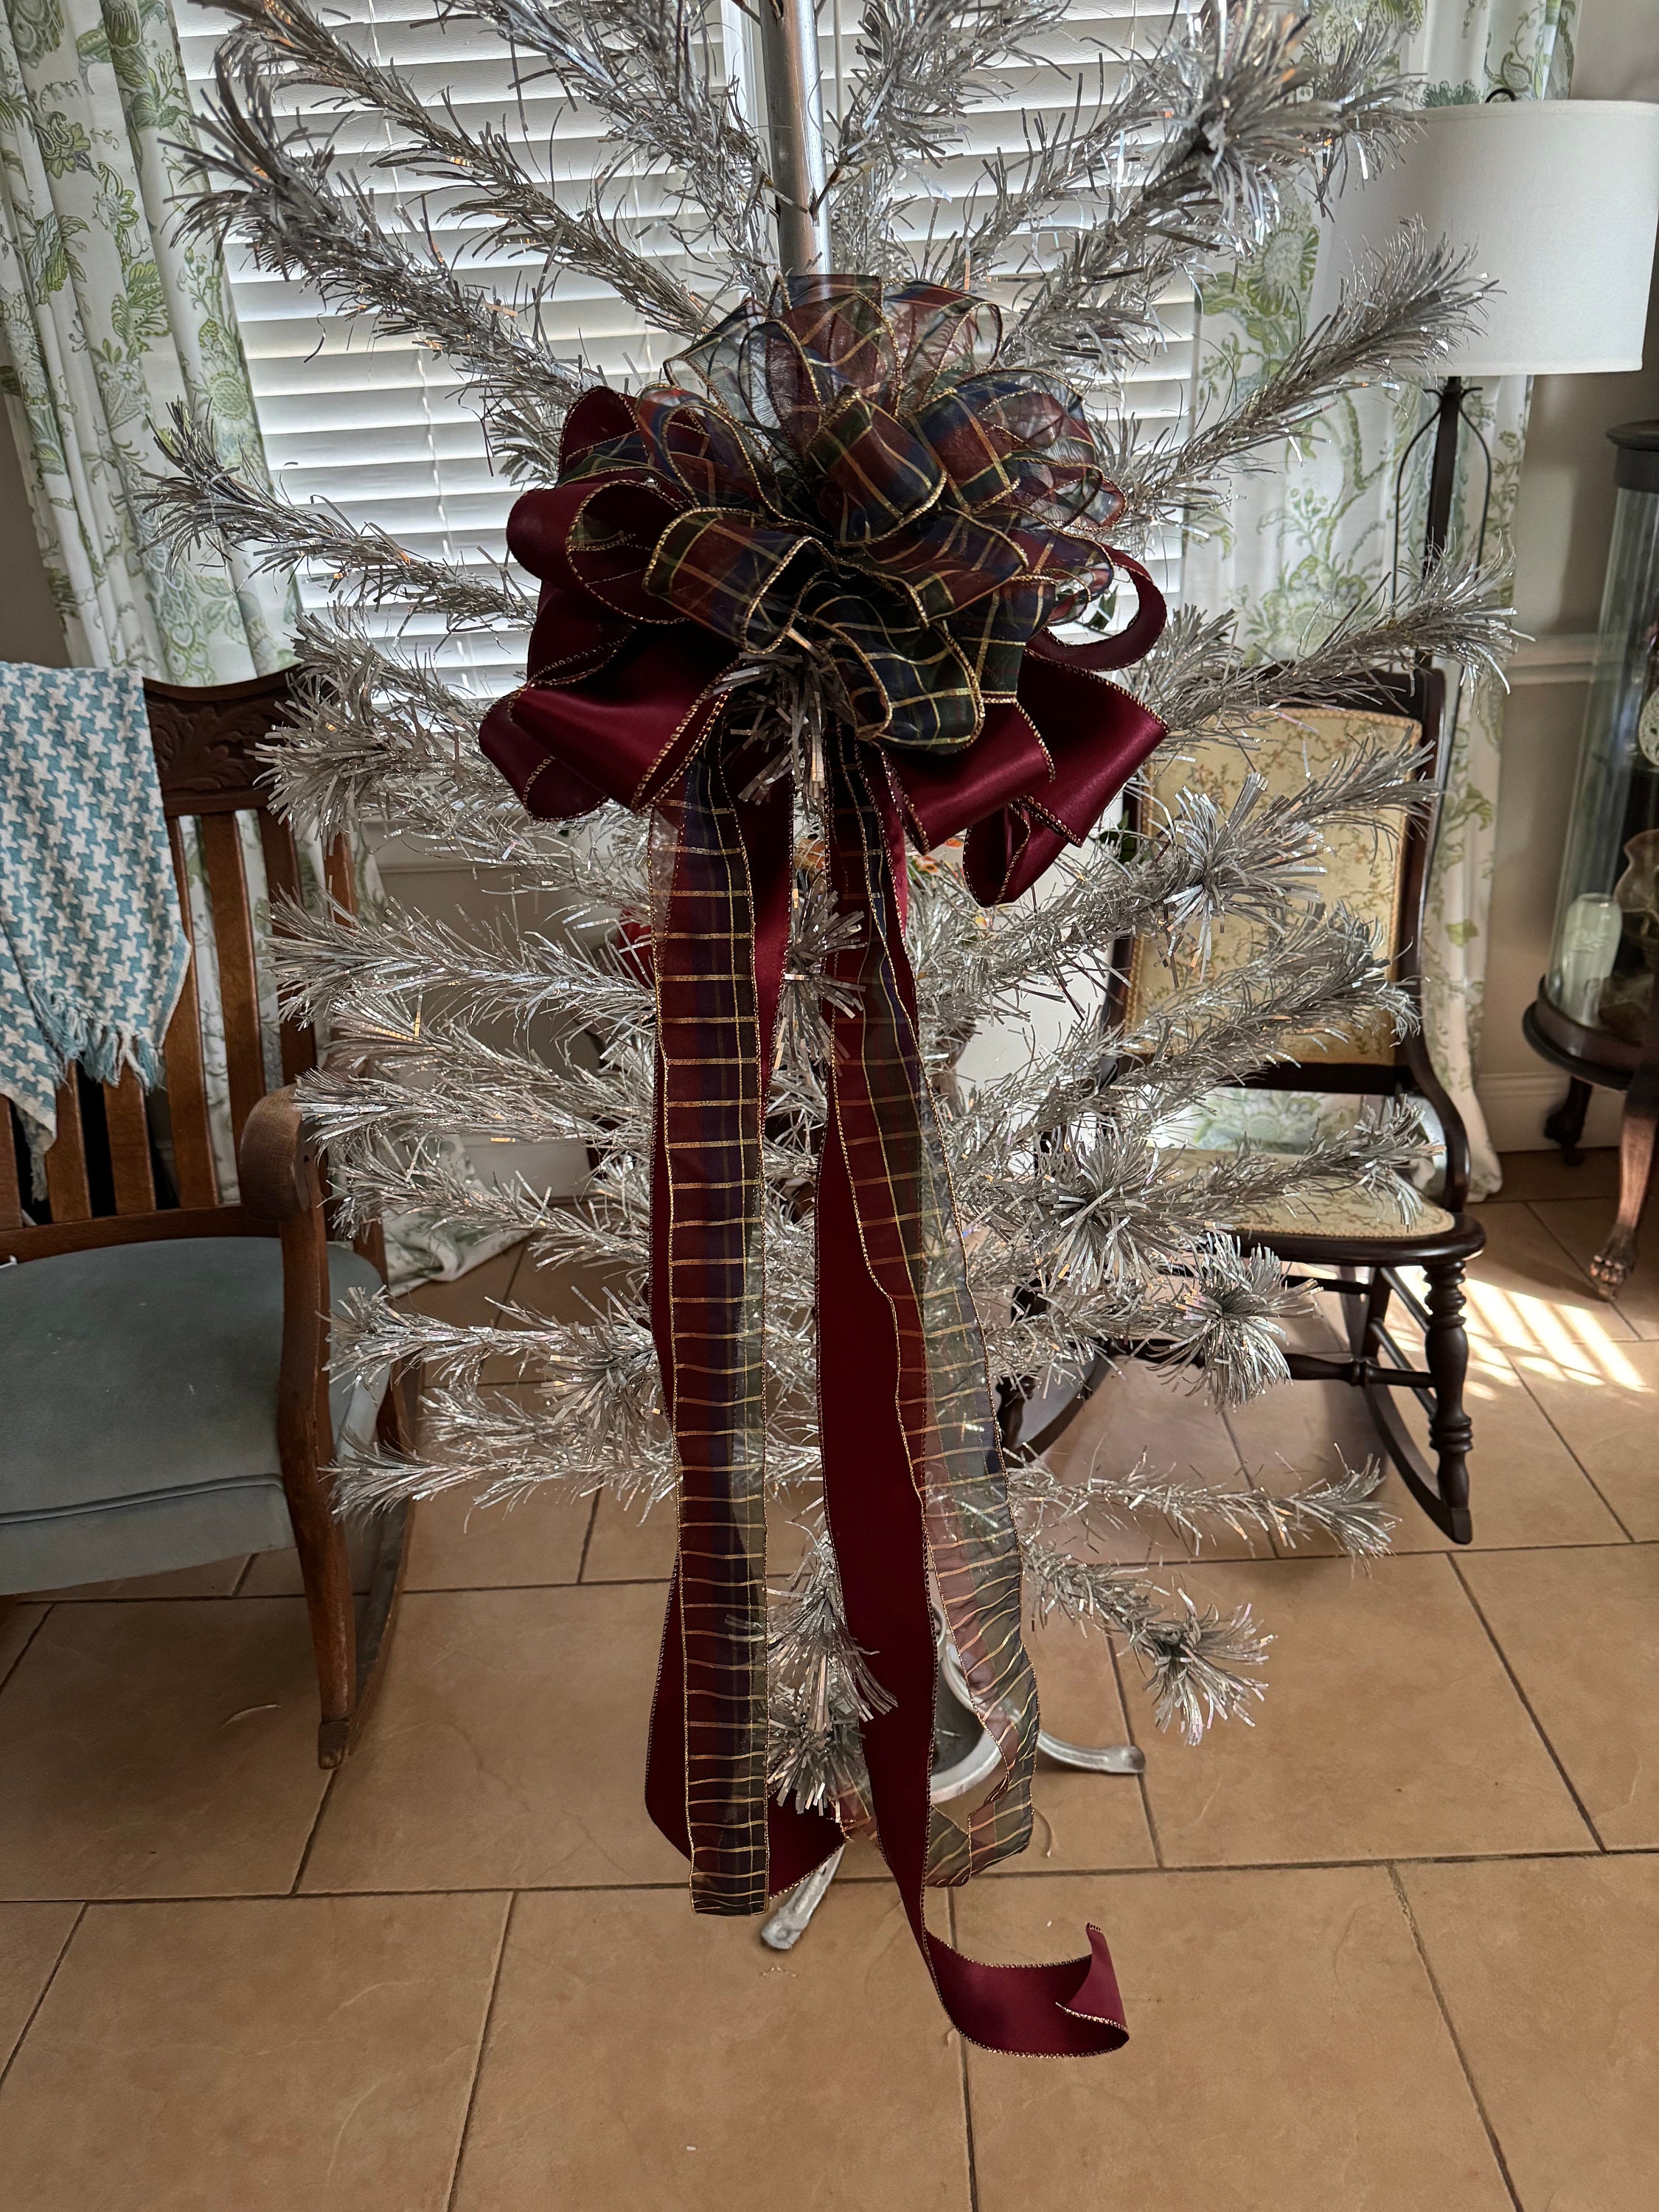 Wired Edge Burgundy Ribbon, Metallic Lame Mesh, 3 Widths, Wedding Bouquet,  Christmas Tree Decoration 